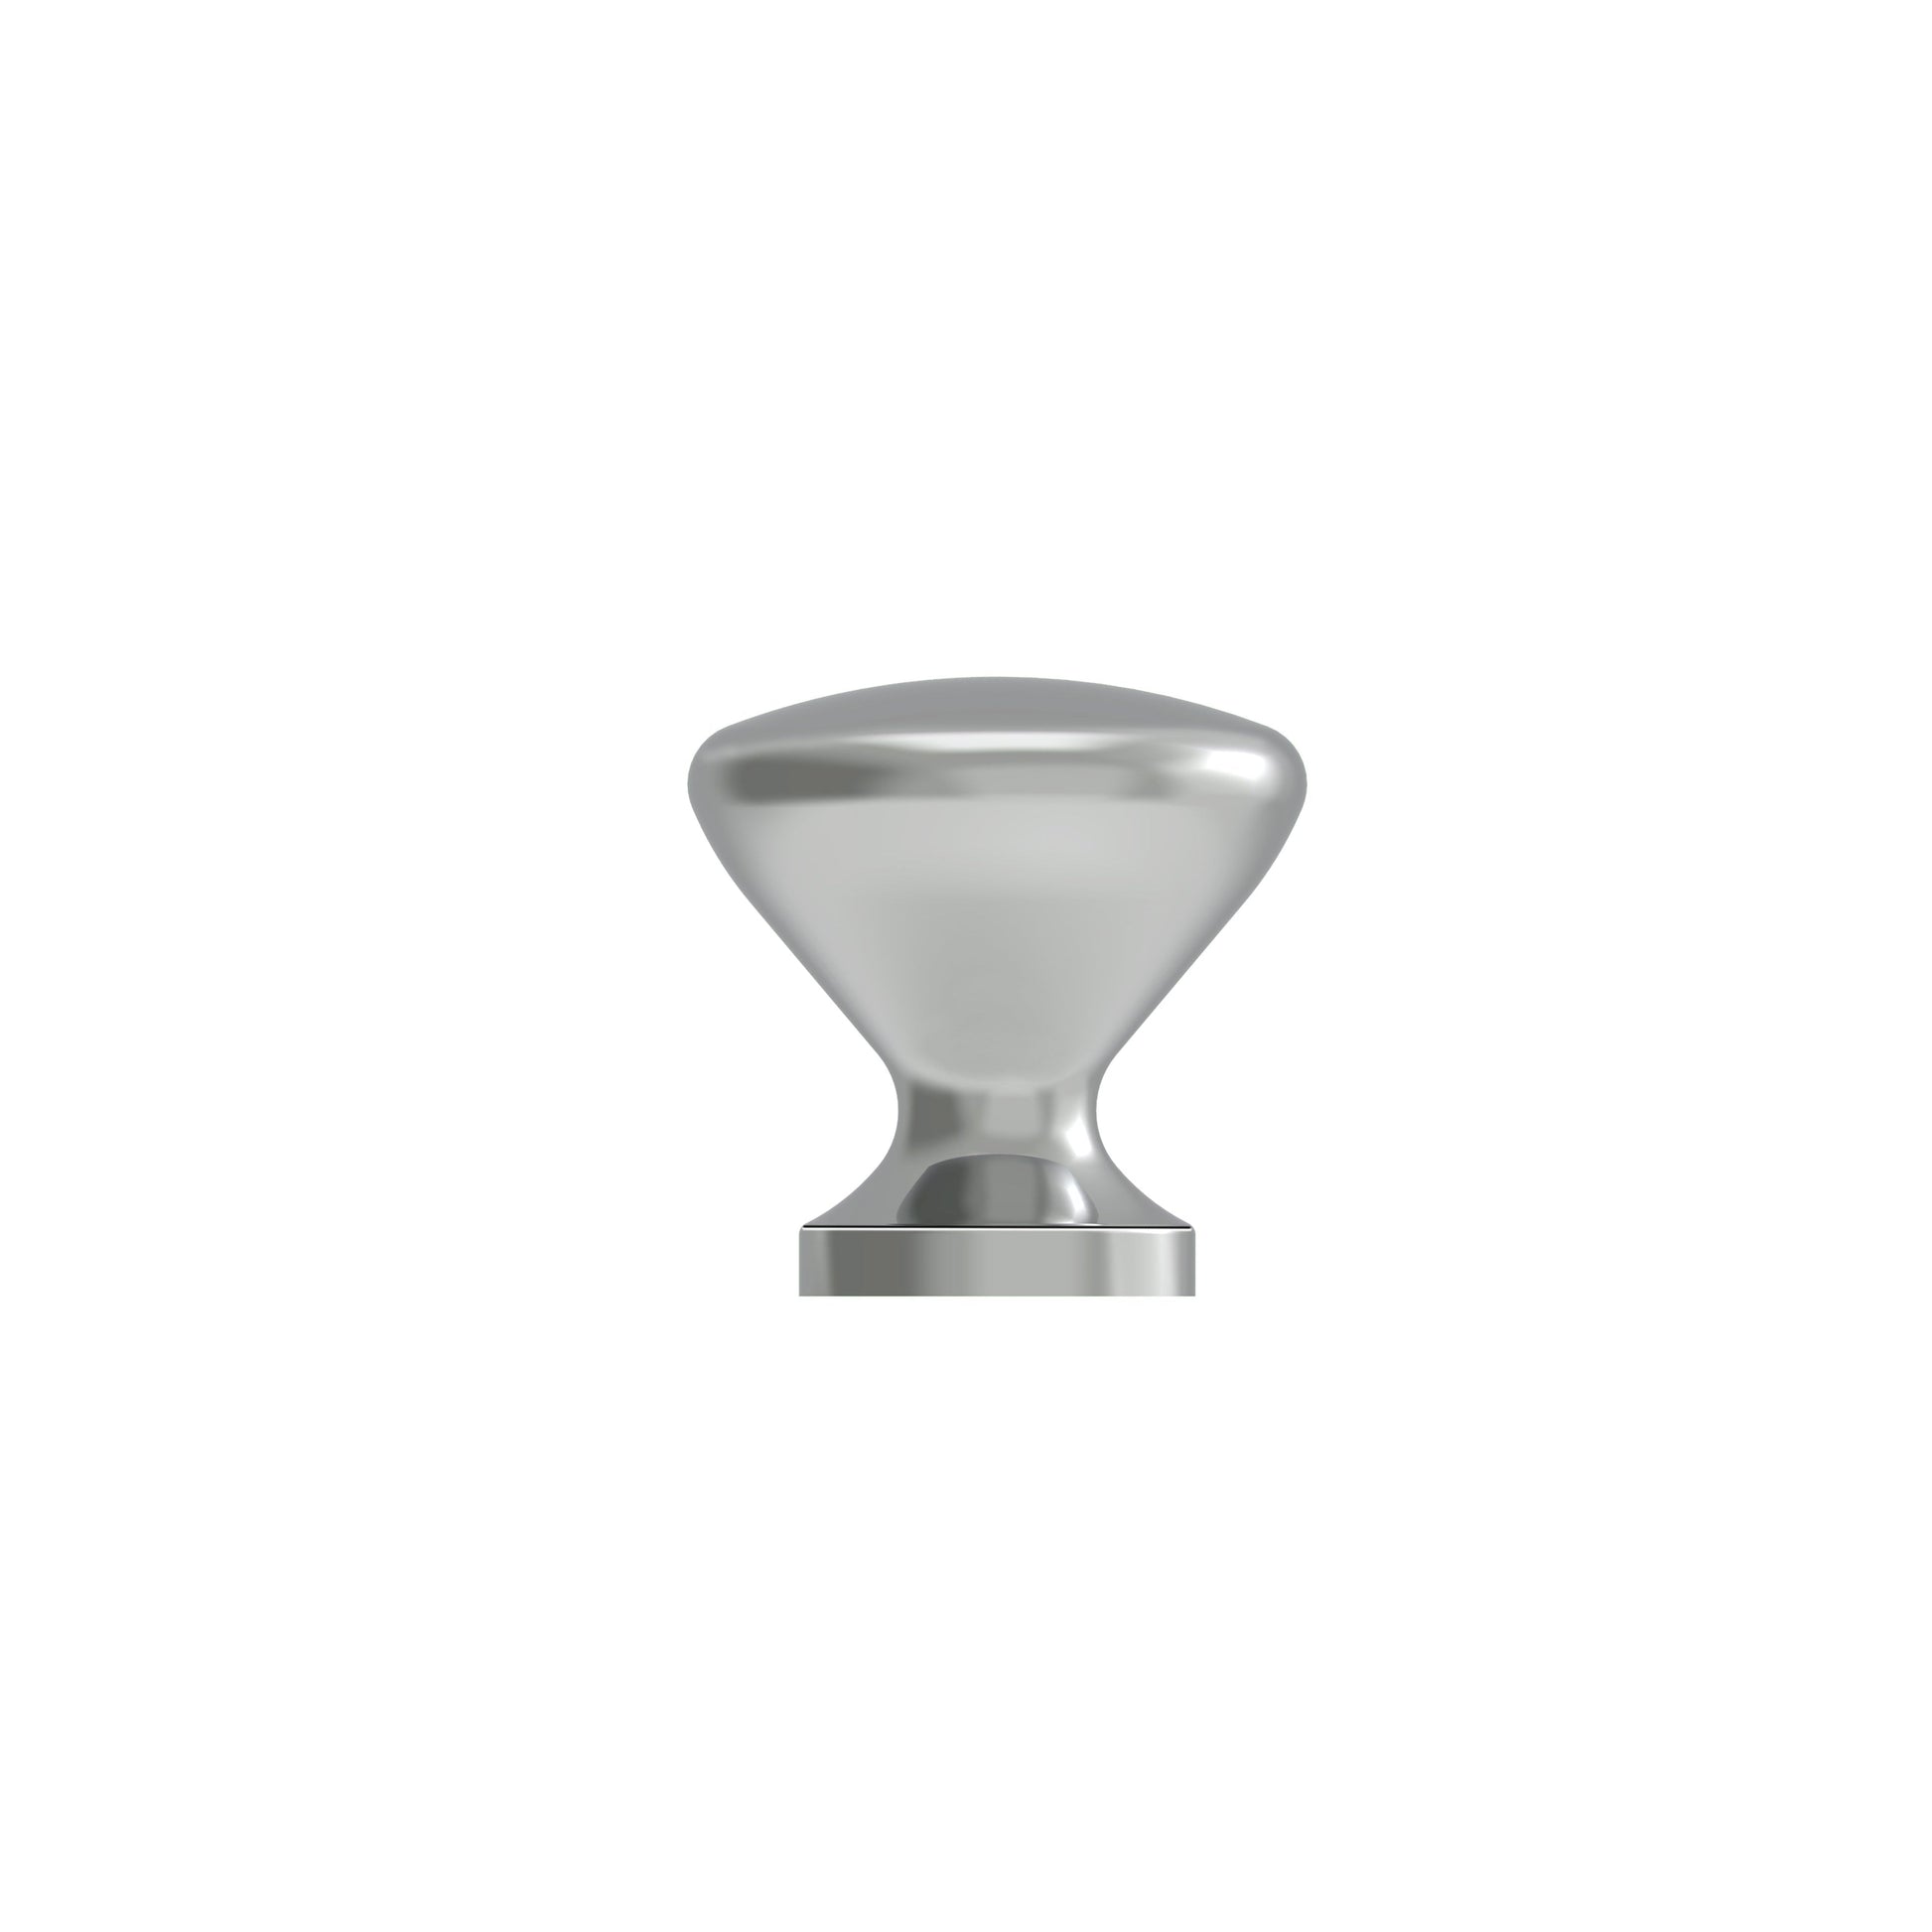 ZEN Design Cup 1" Diameter Chrome Single Hole Cabinet Knob